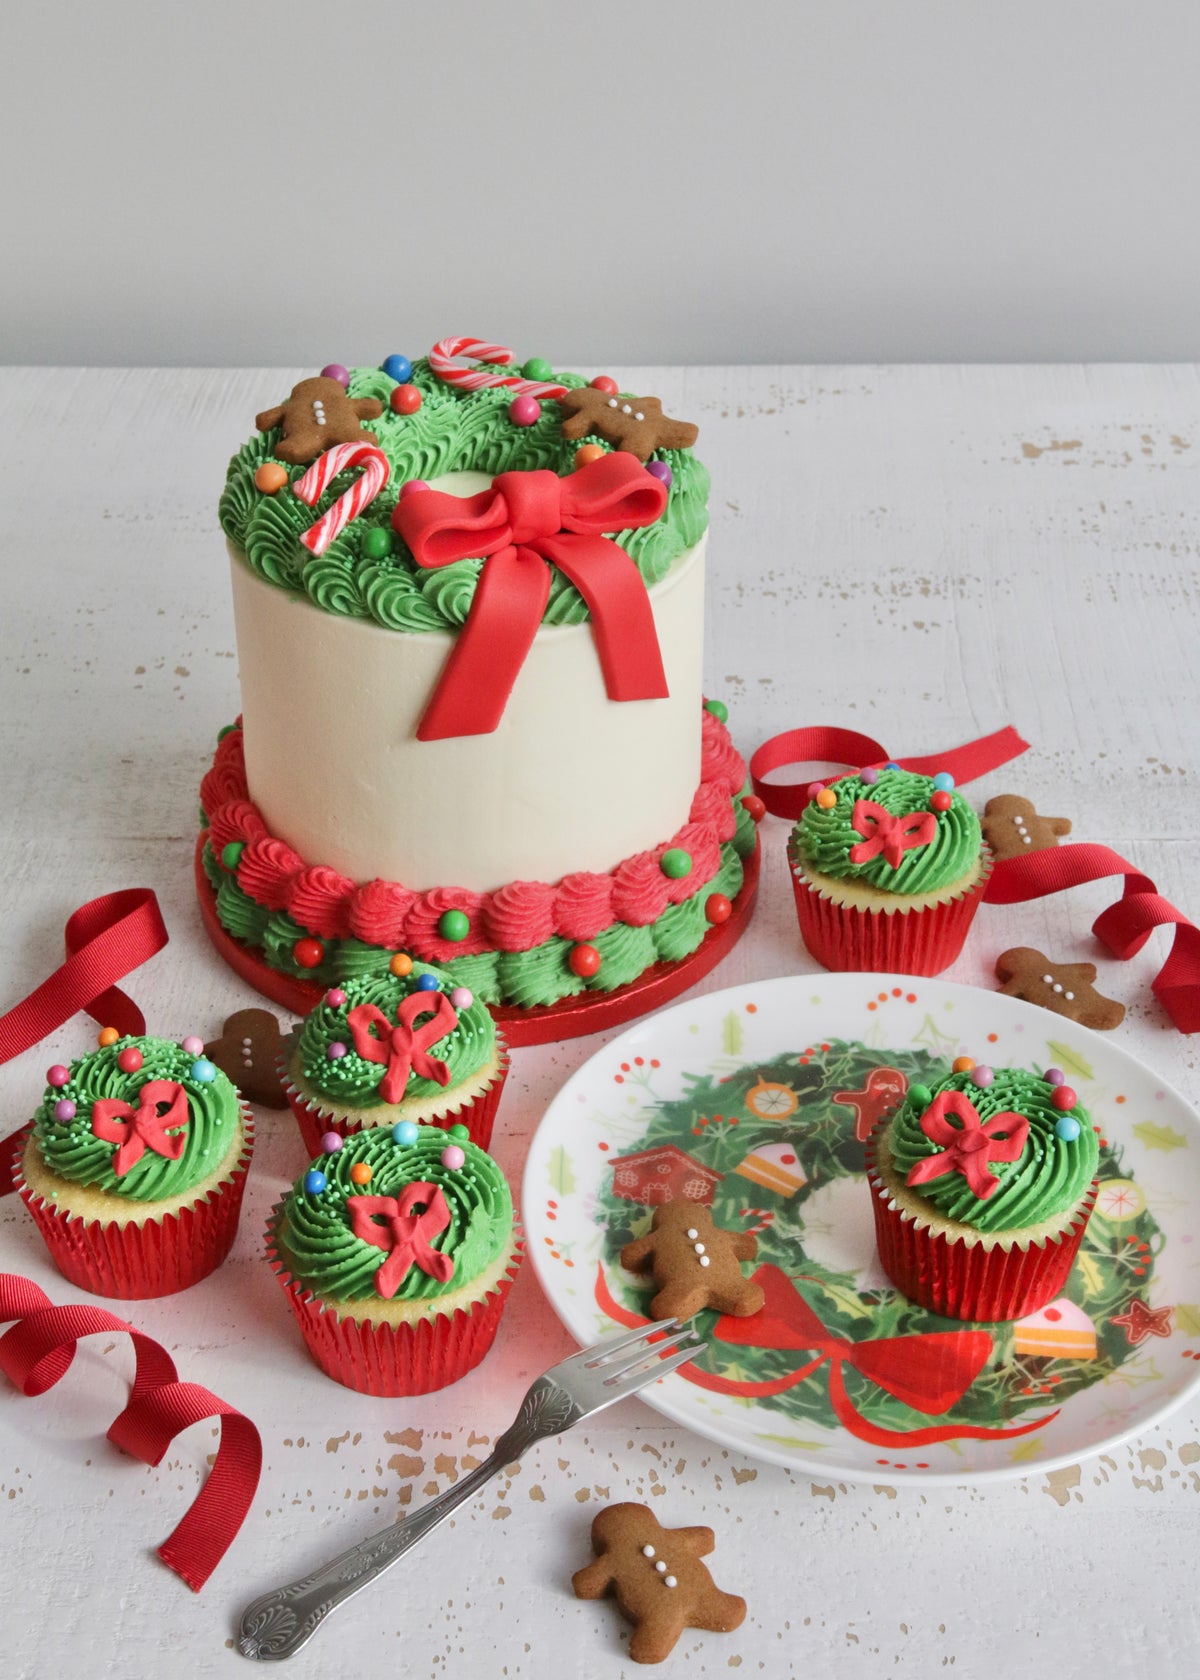 Christmas Wreath Cake, Cupcakes and Plate